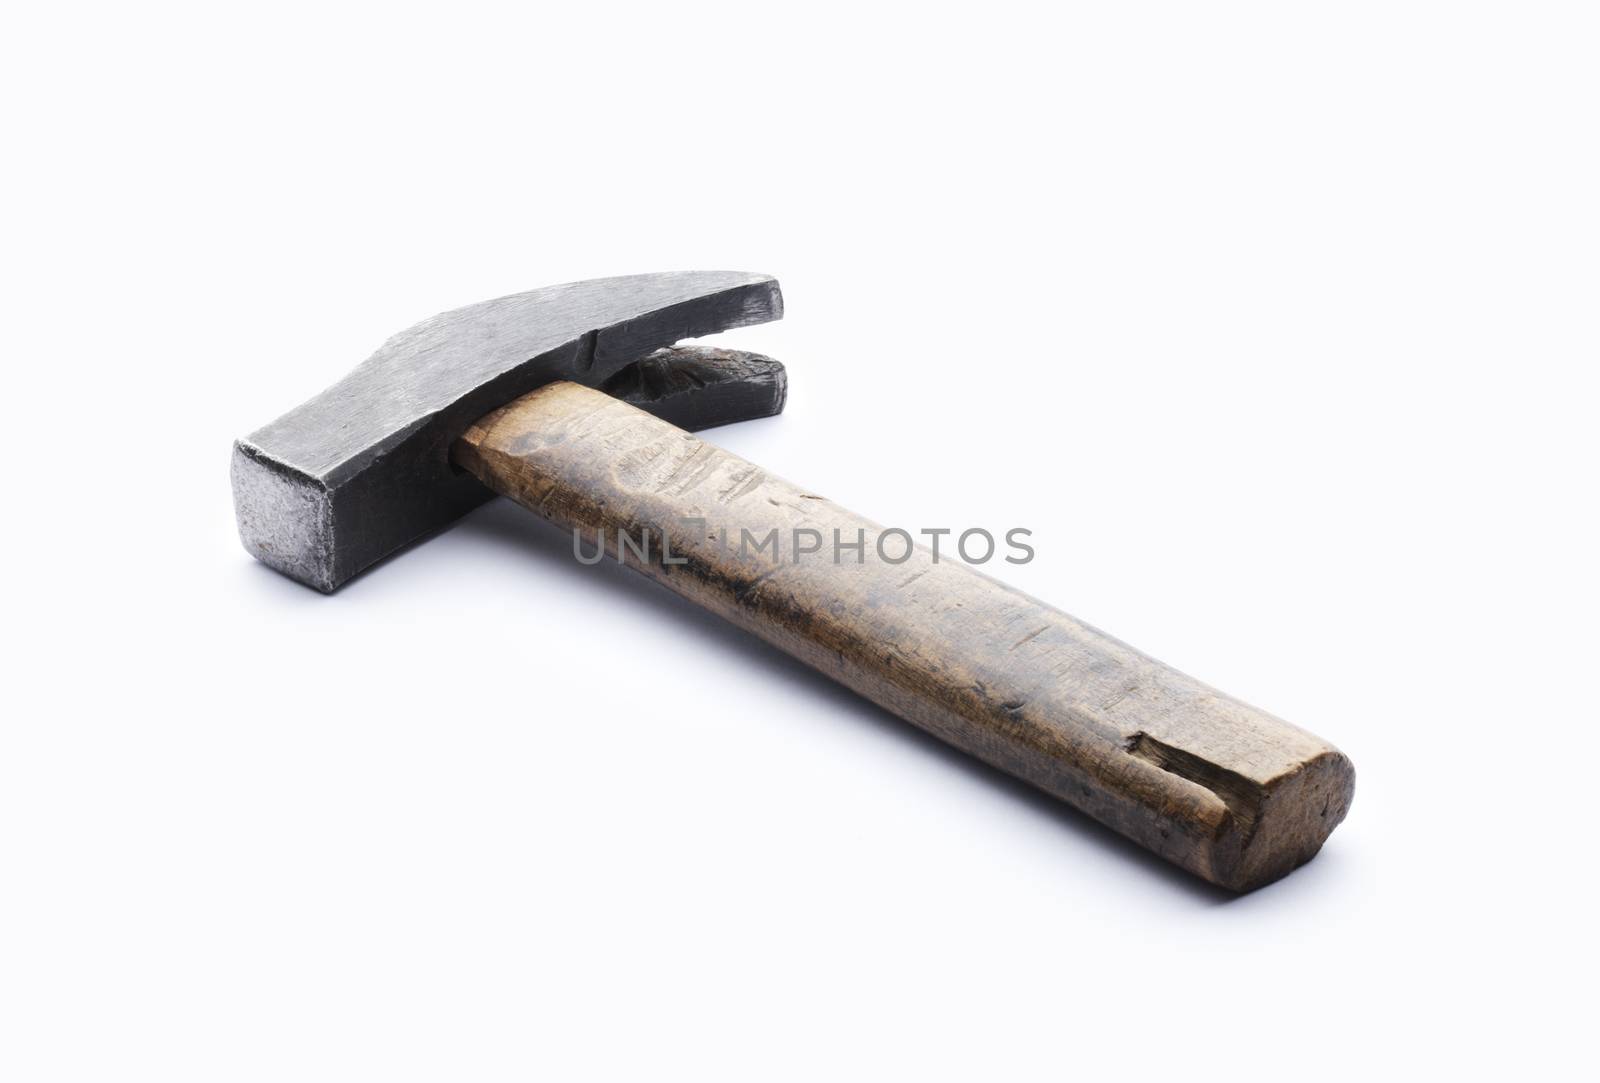 Work Tools: Hammer on white background